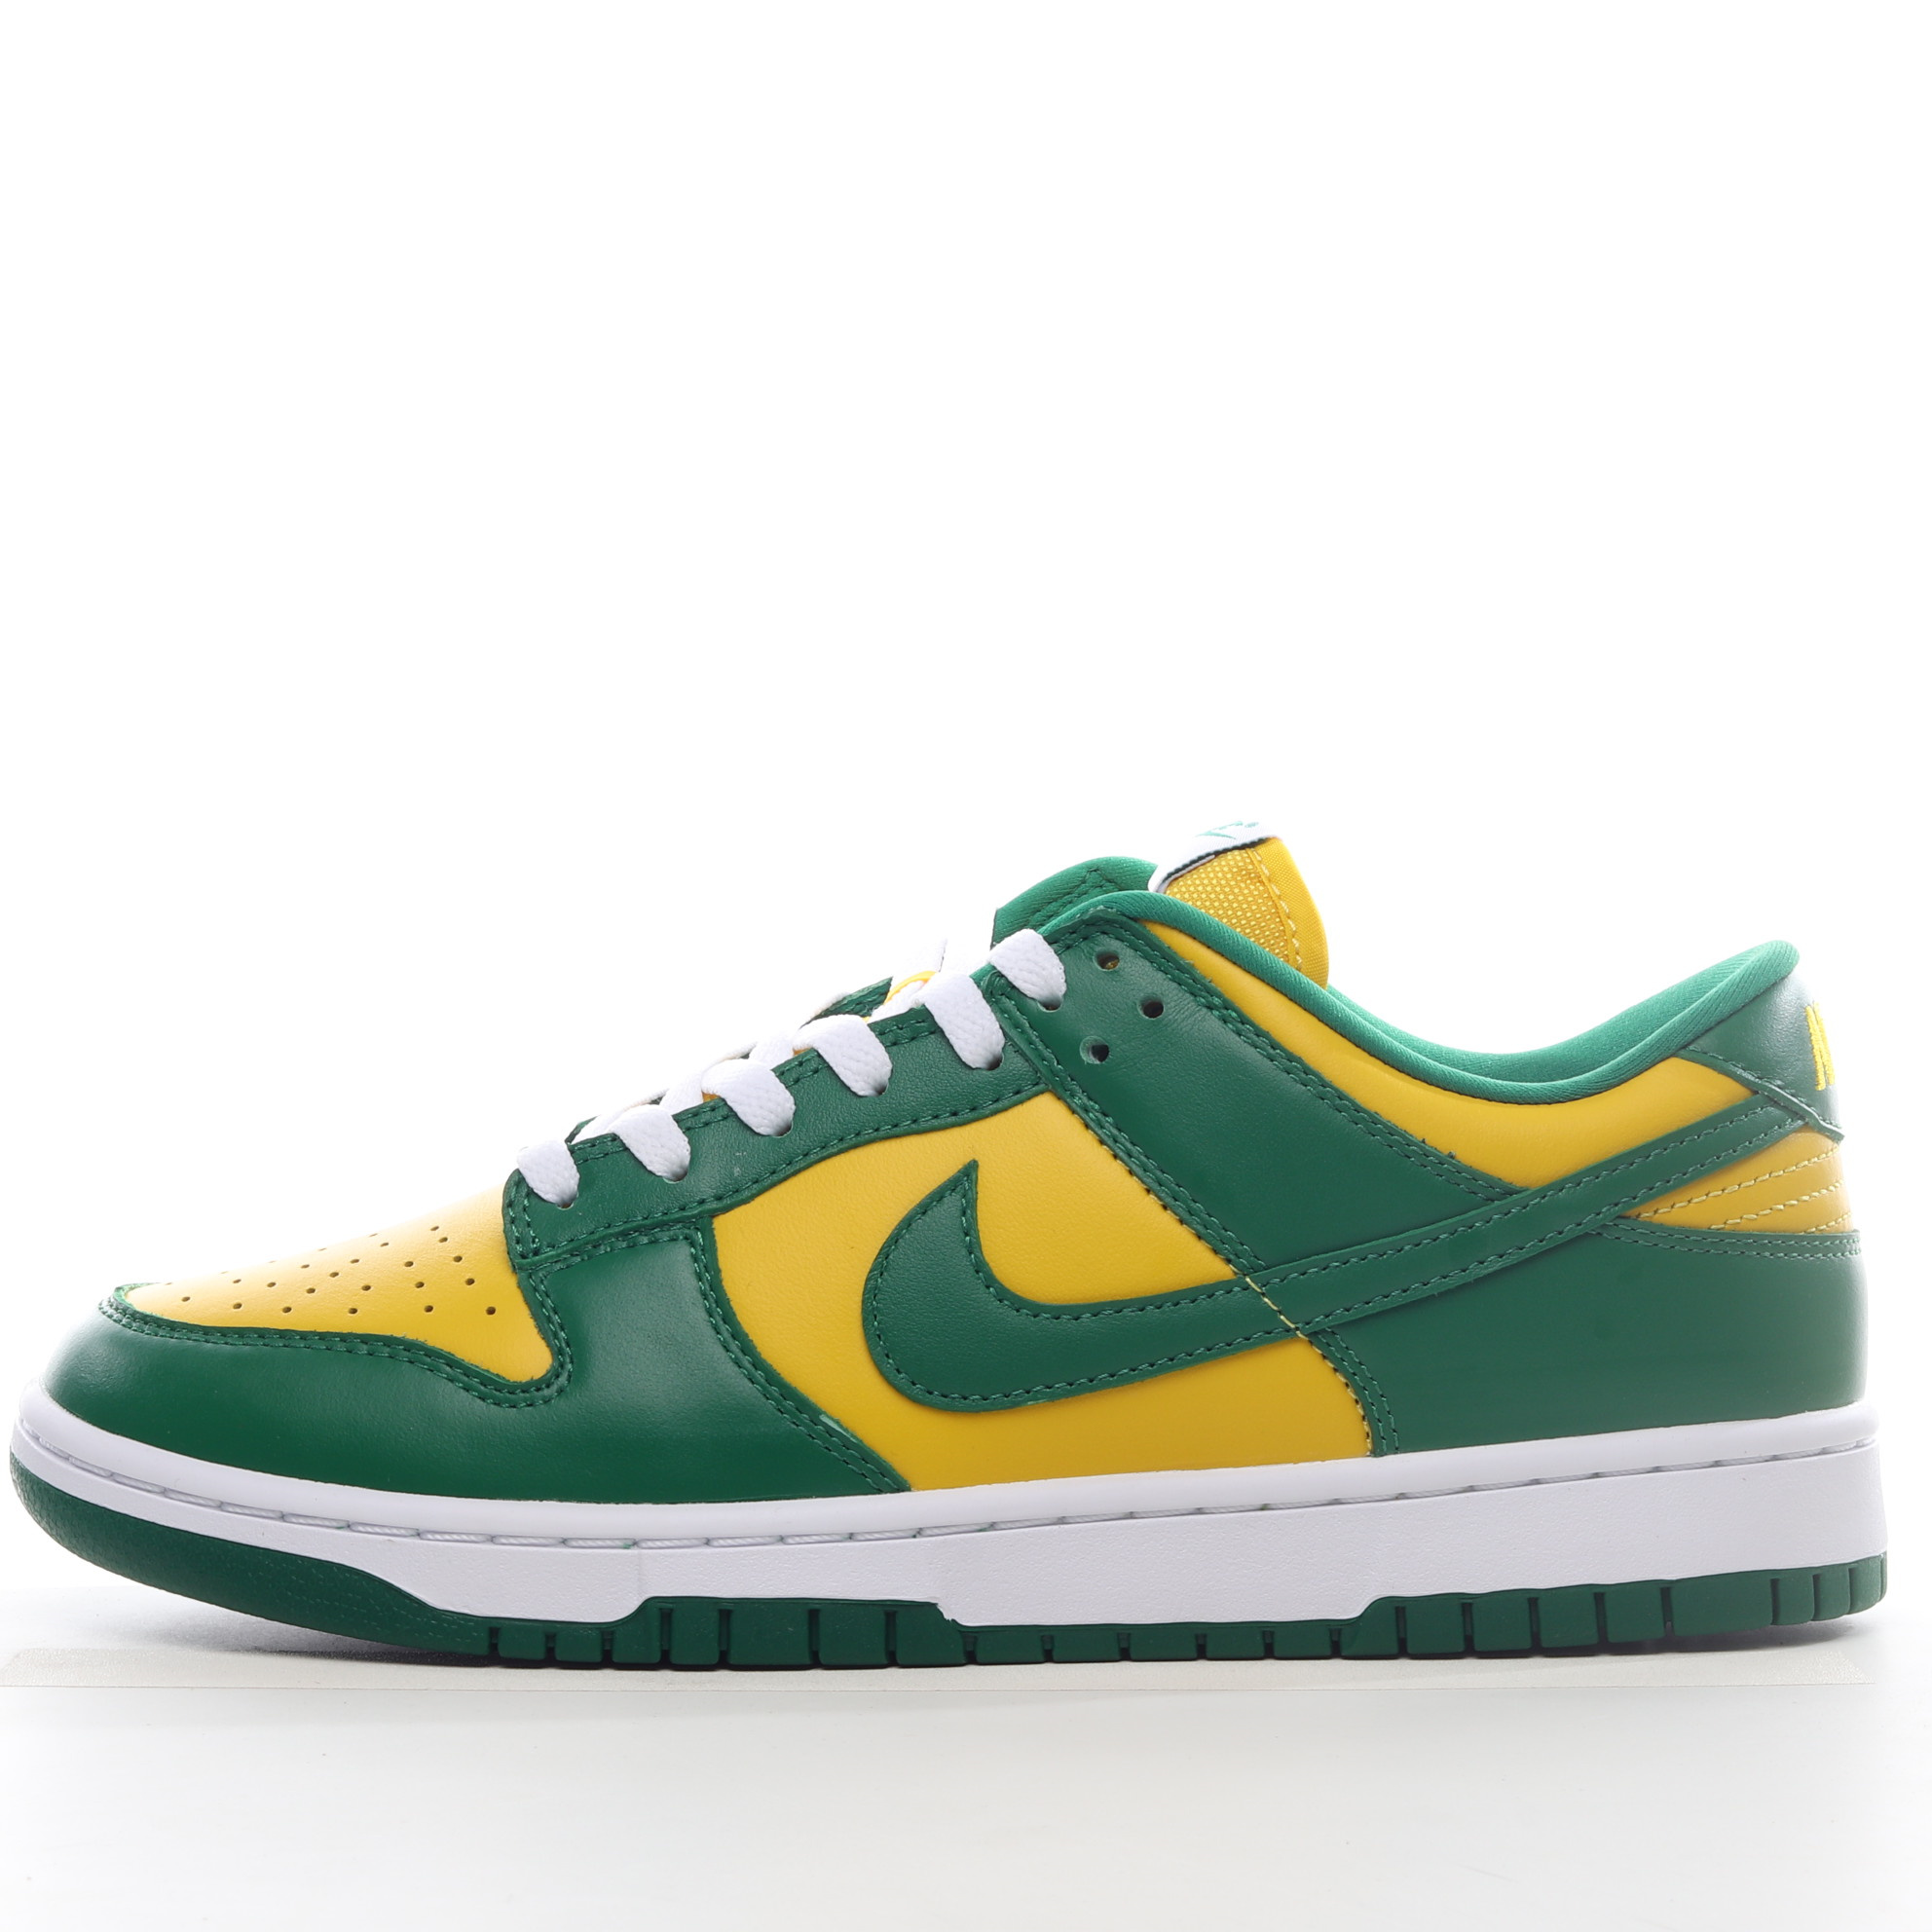 Men's Dunk Low SP Green/Yellow Shoes ''Brazil” 0219